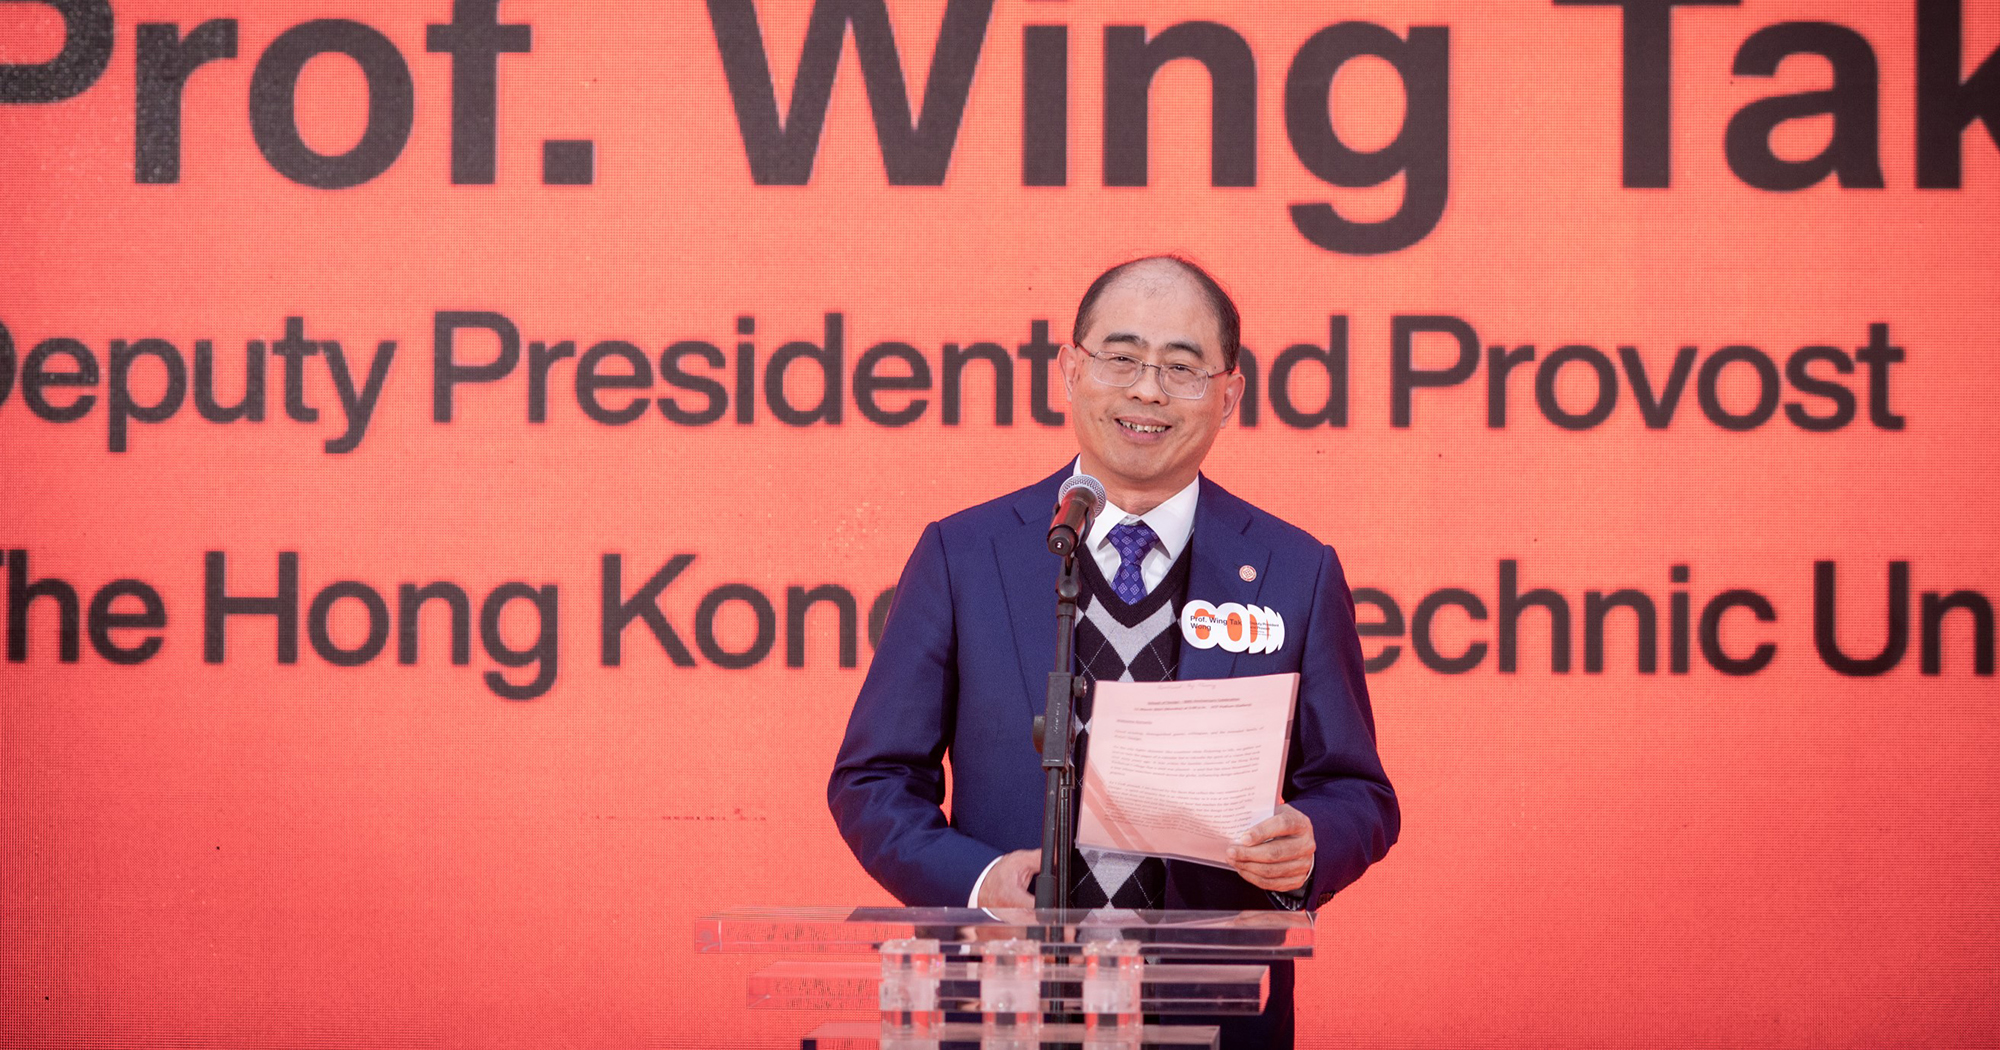 Prof. Wing-tak Wong, Deputy President and Provost of PolyU